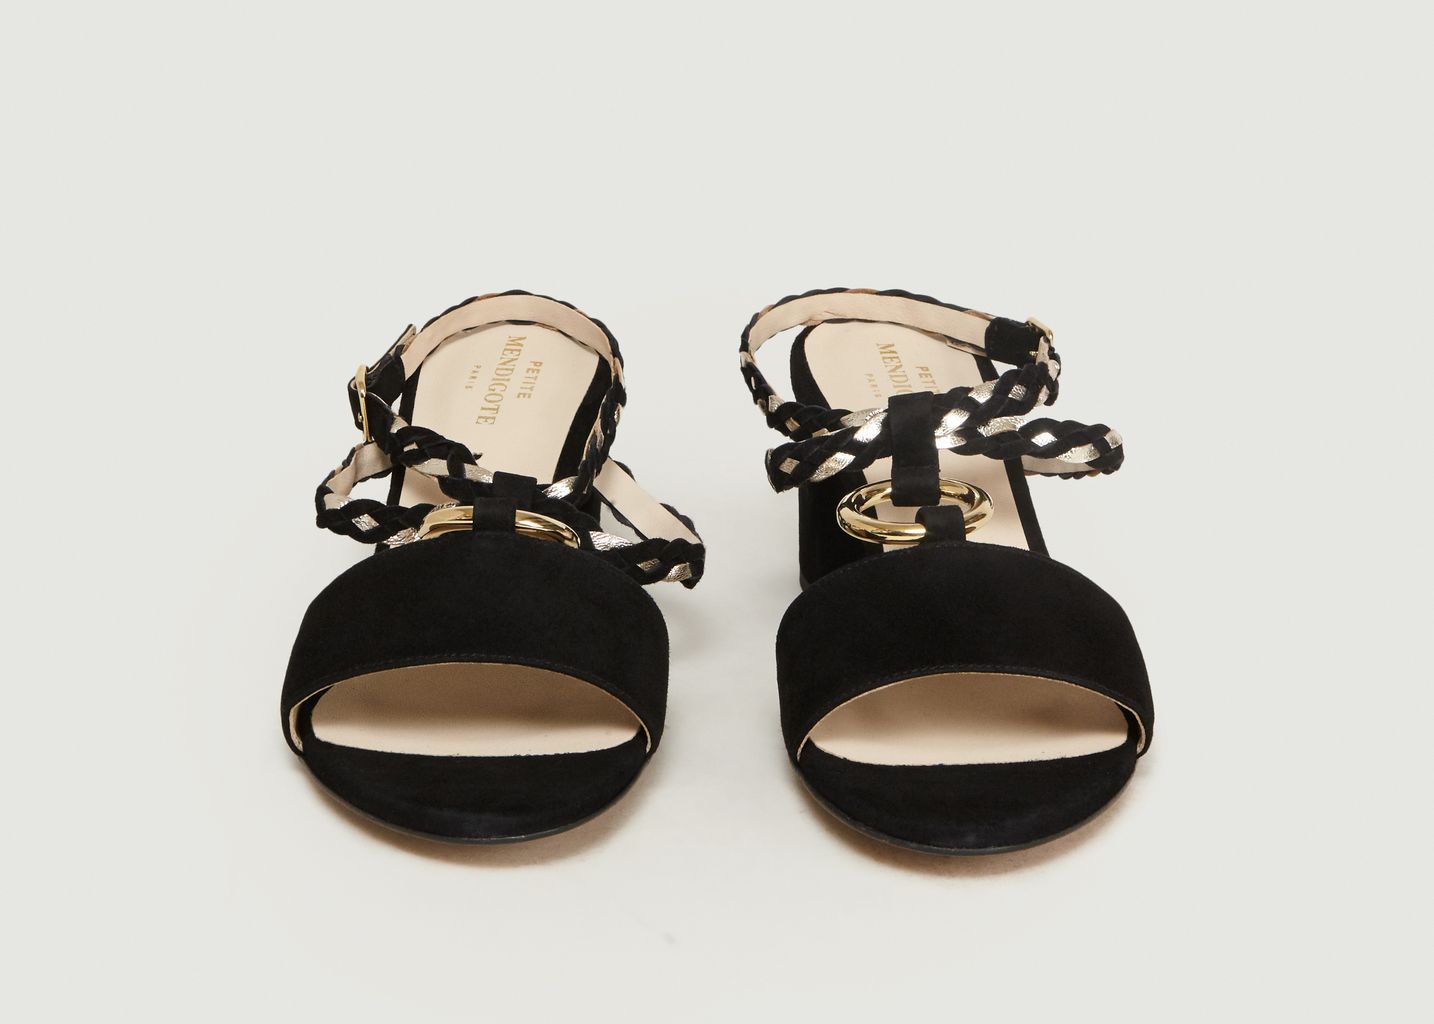 Hepburn Sandals - Petite Mendigote